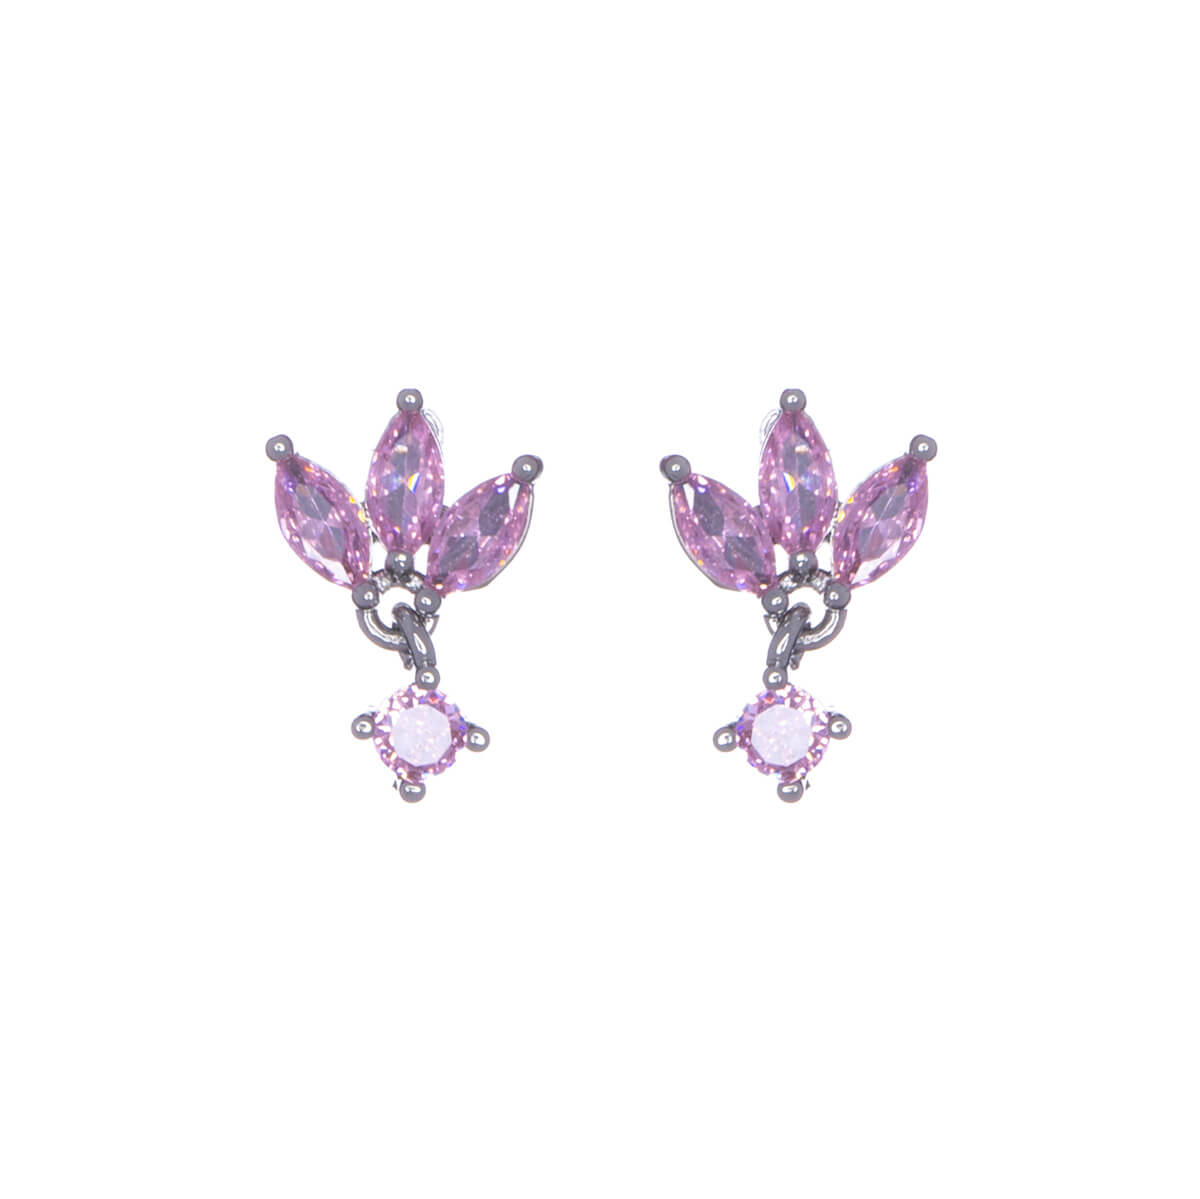 Delicate zirconia earrings